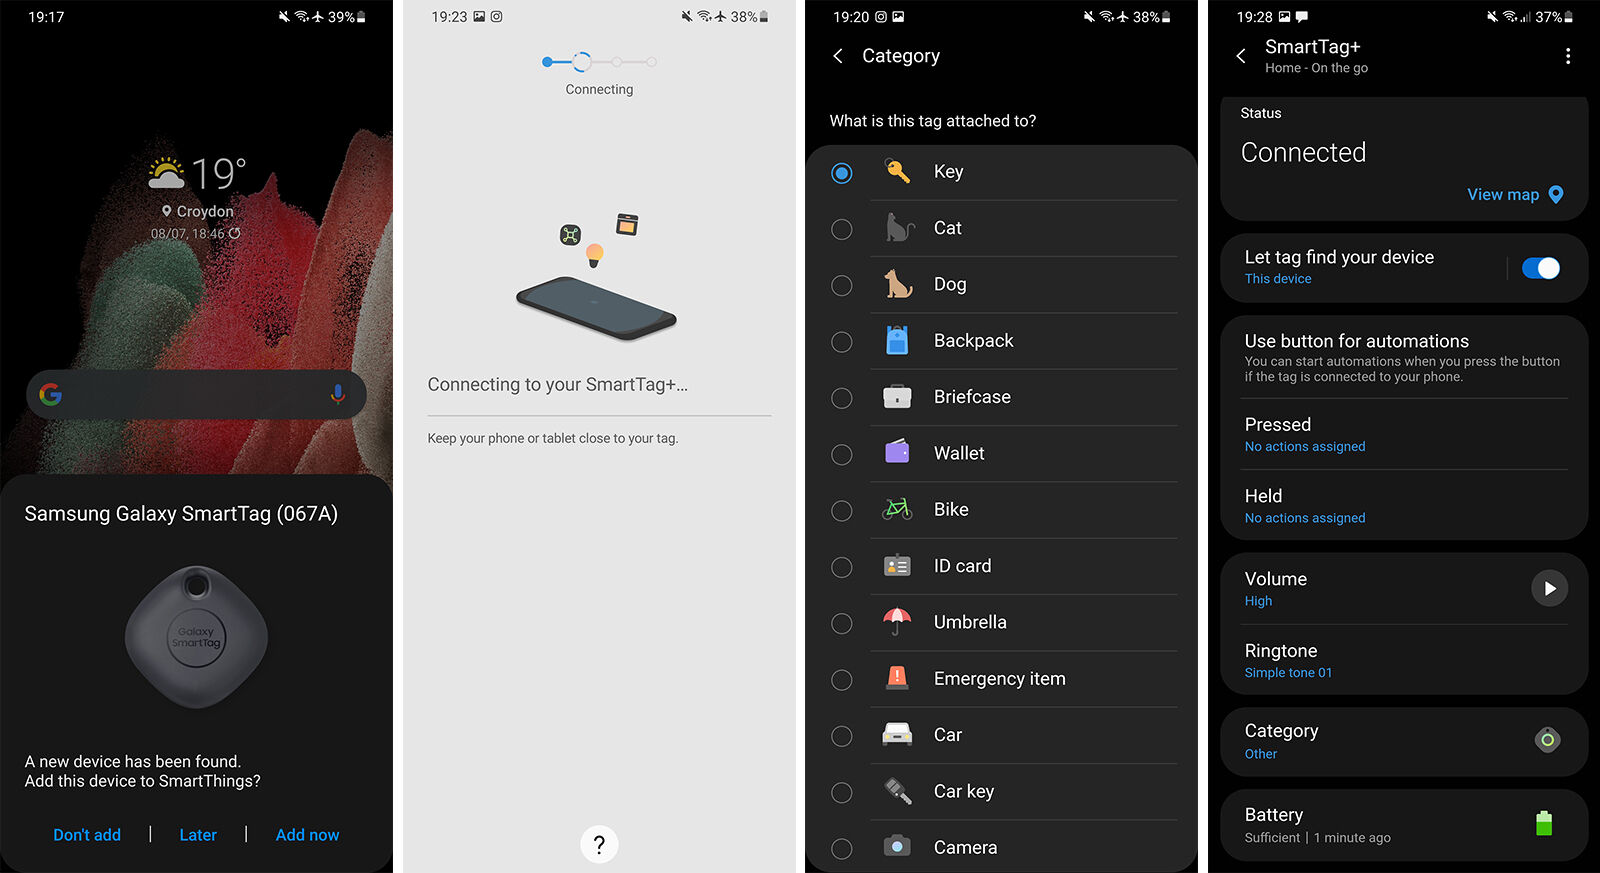 Samsung Galaxy SmartTag pairing screenshots